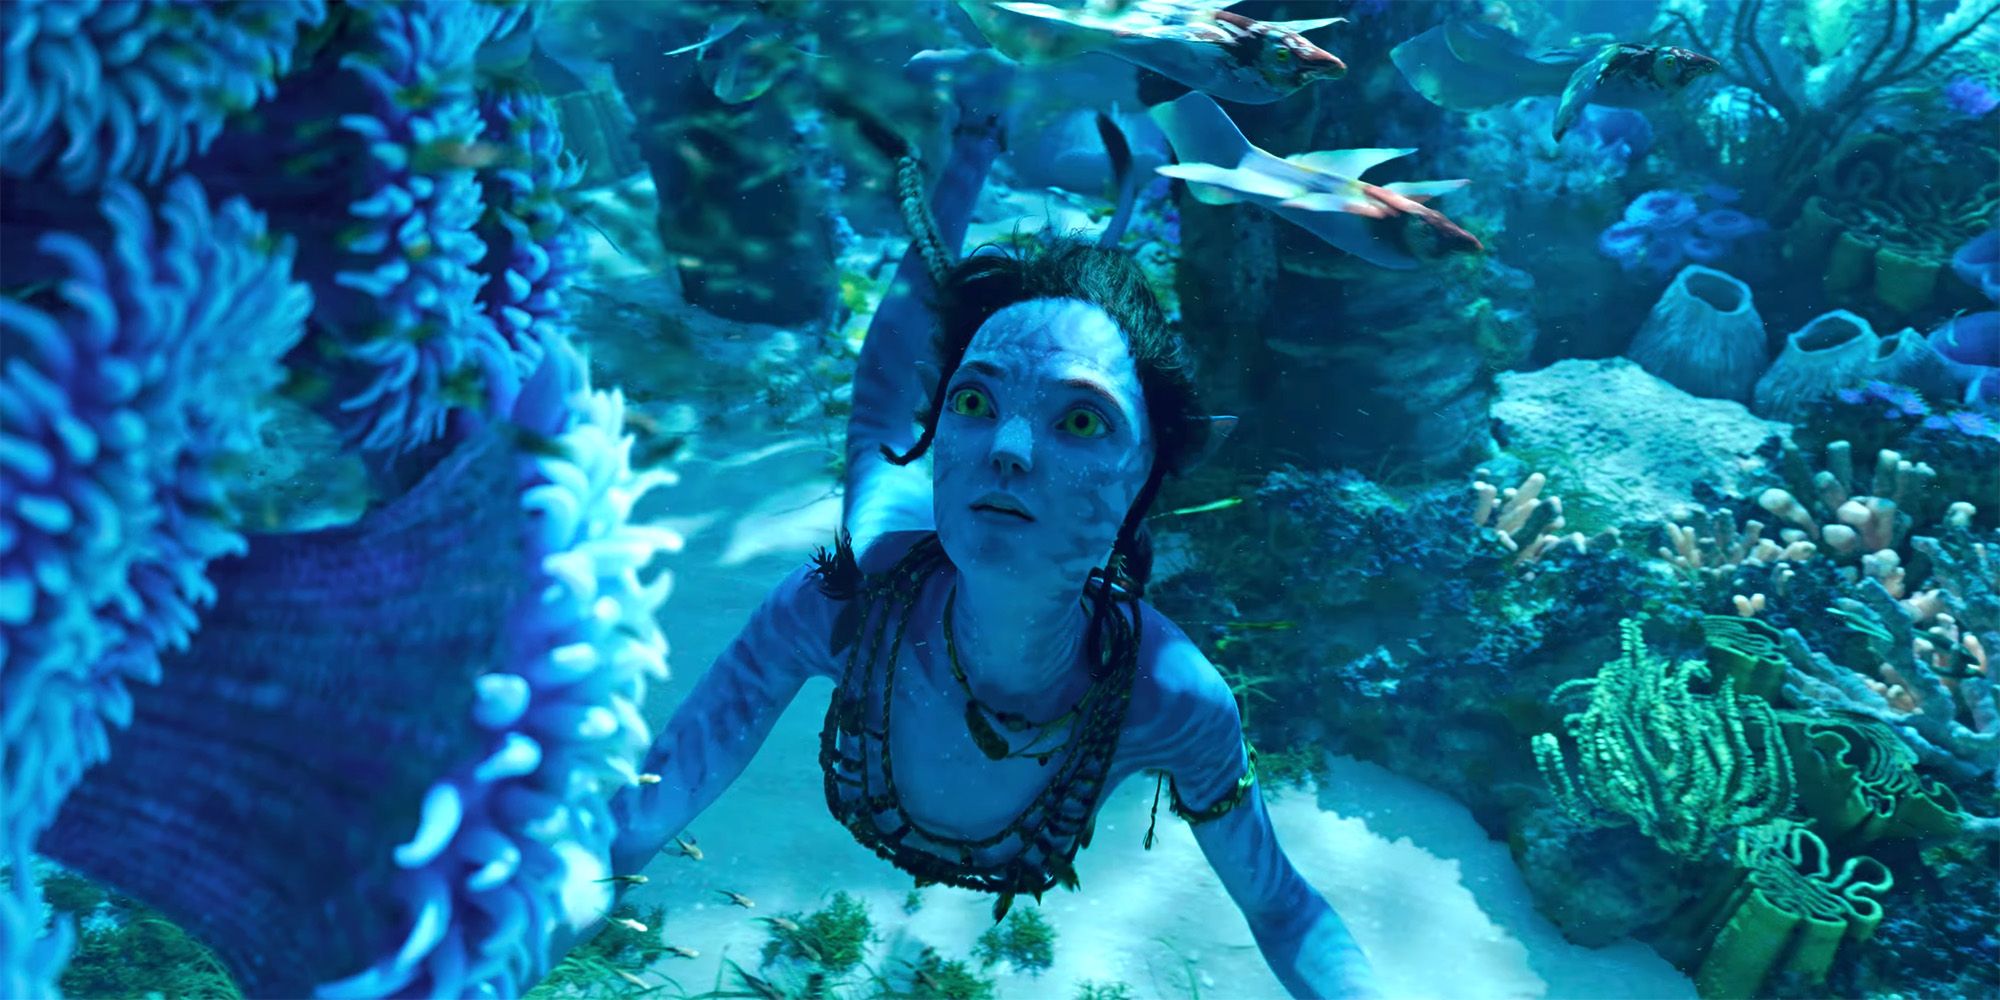 Manga Avatar 2 Image Shows More Gorgeous Underwater Action 🍀 mangahere